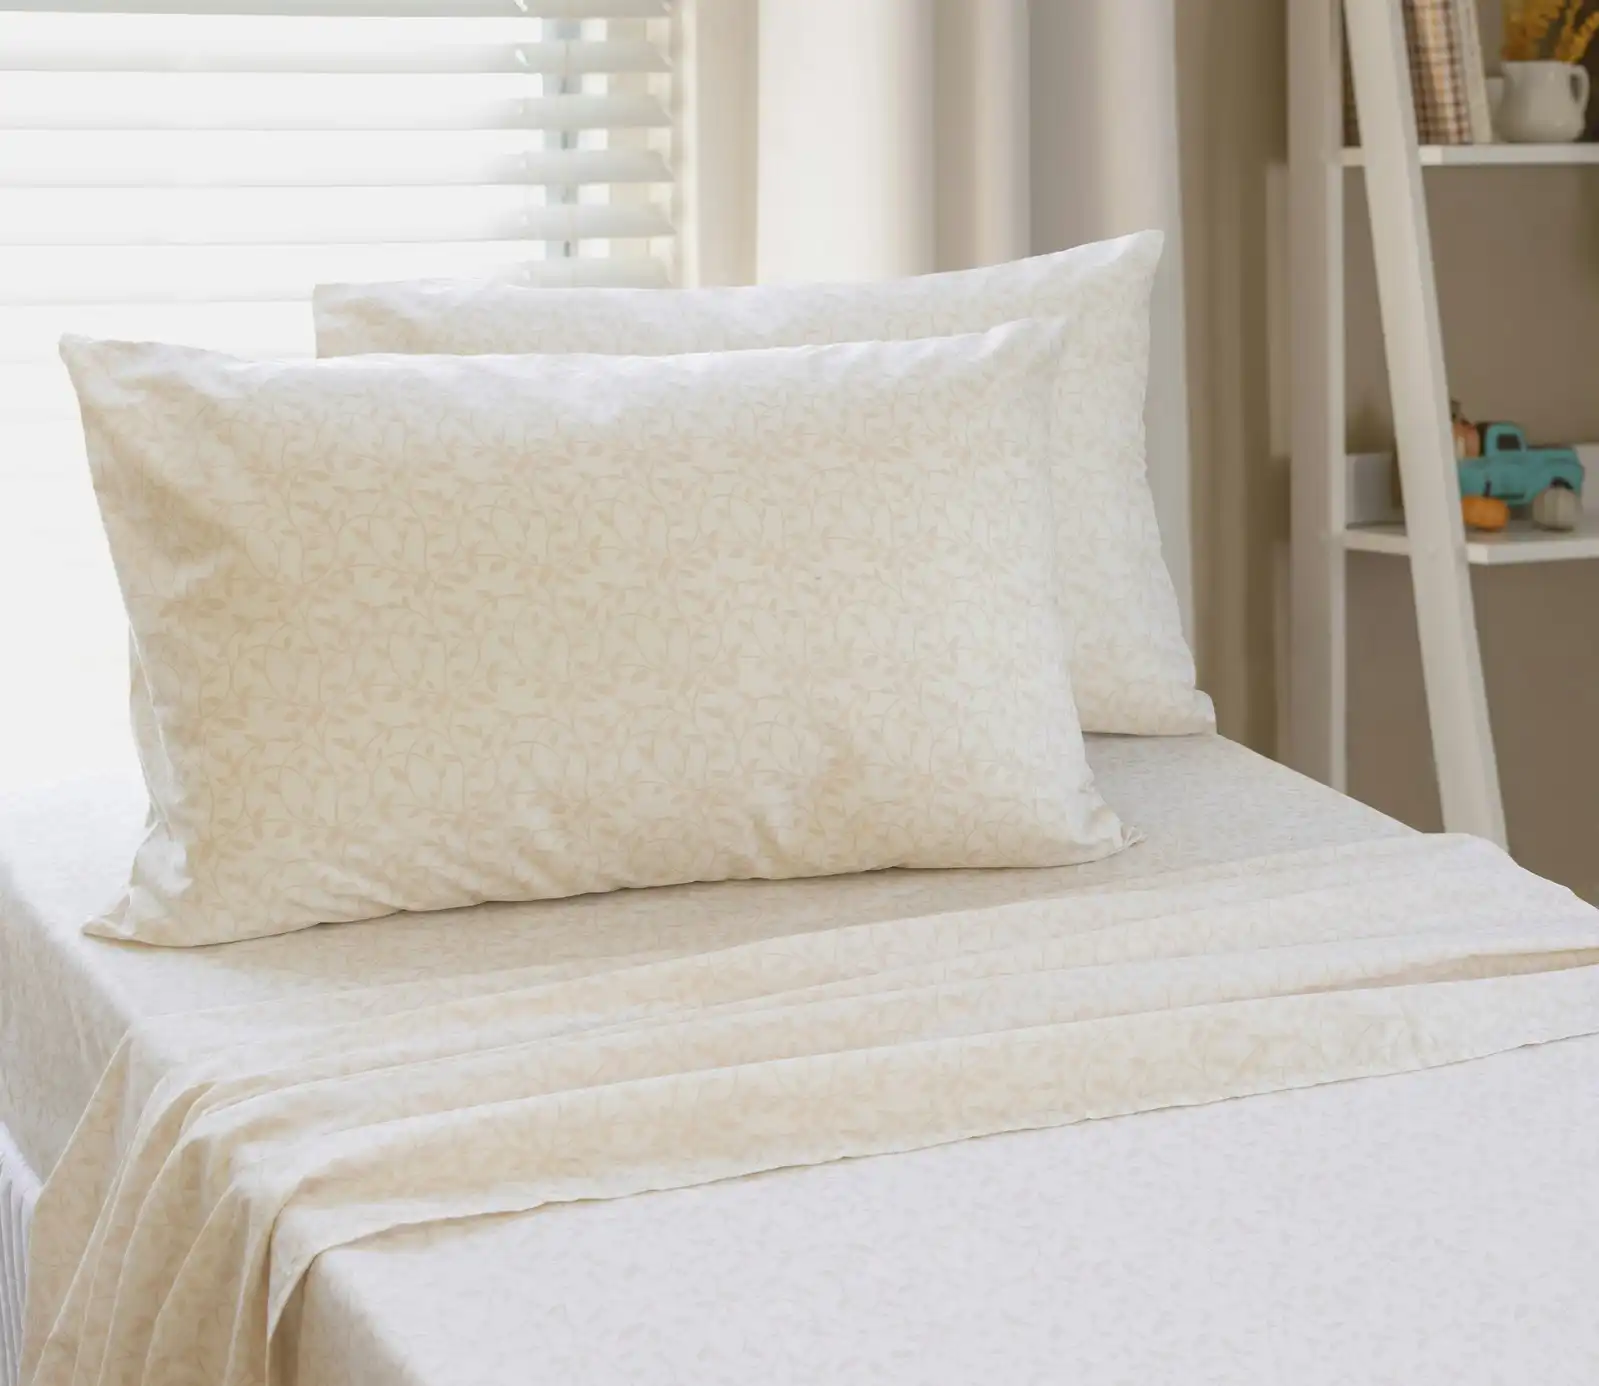 Jelly Bean Kids/Children Single Bed Vine Cotton Sheet Set Home Bedding Soft Rose